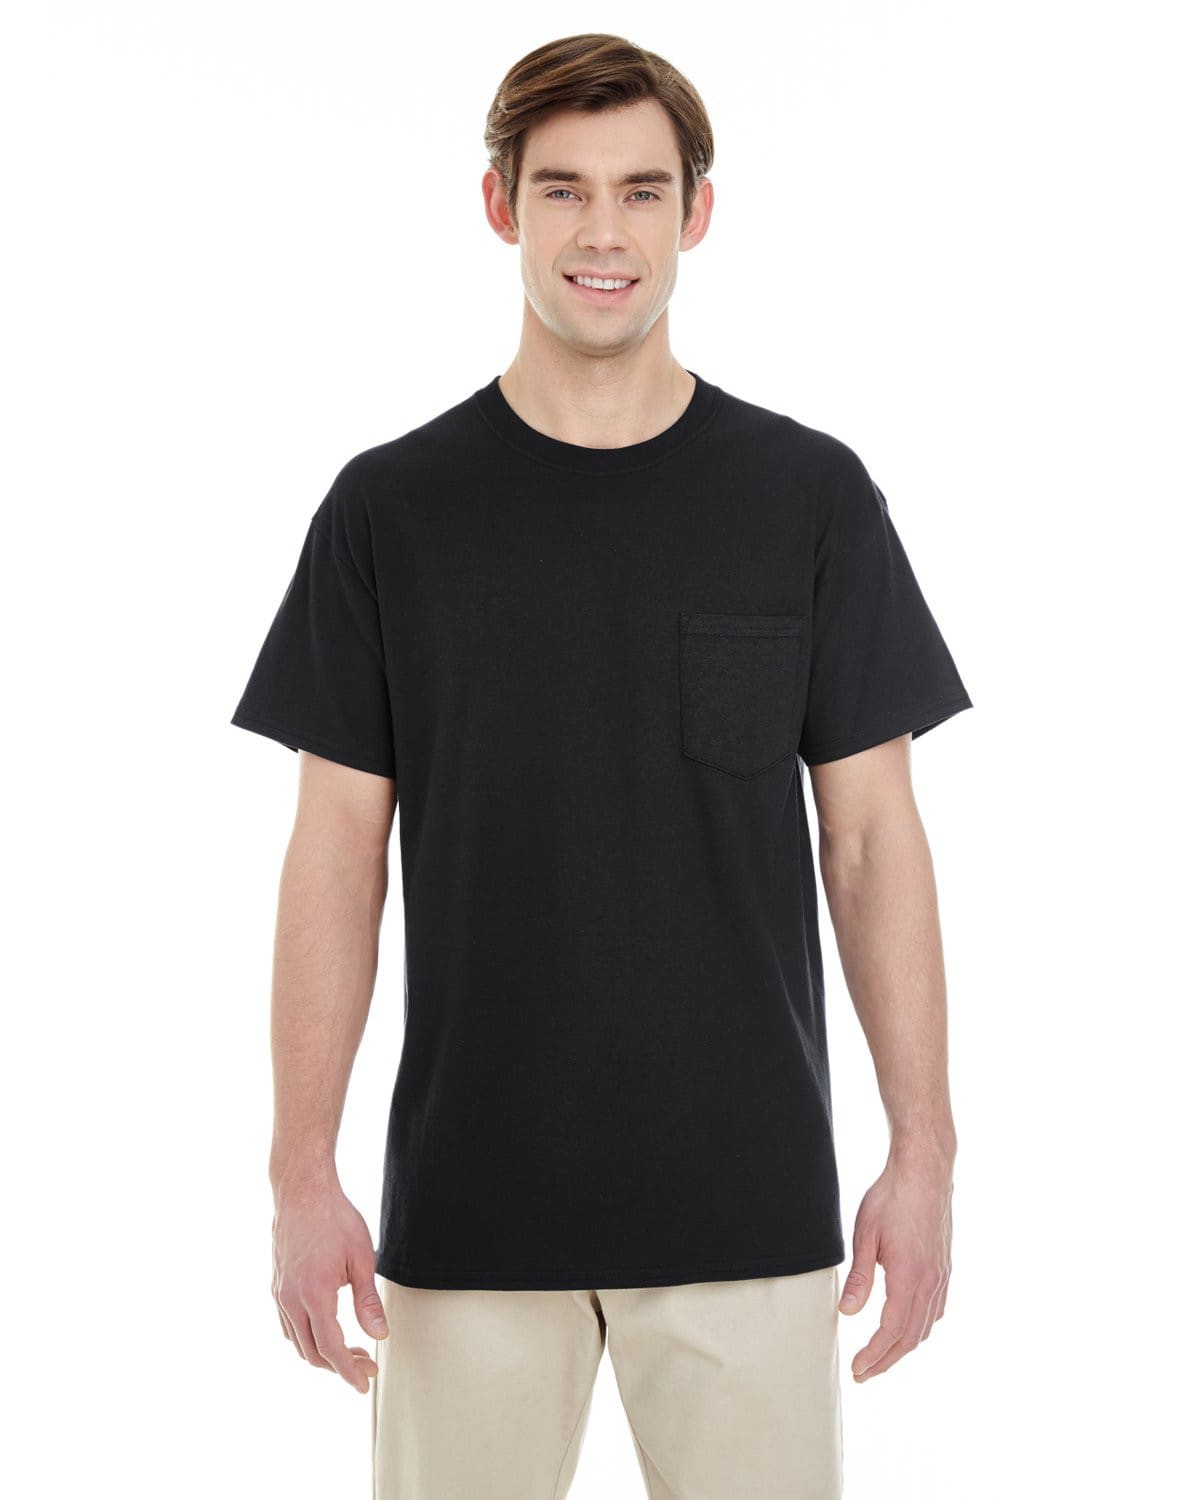 g530-adult-heavy-cotton-5-3oz-pocket-t-shirt-Small-BLACK-Oasispromos